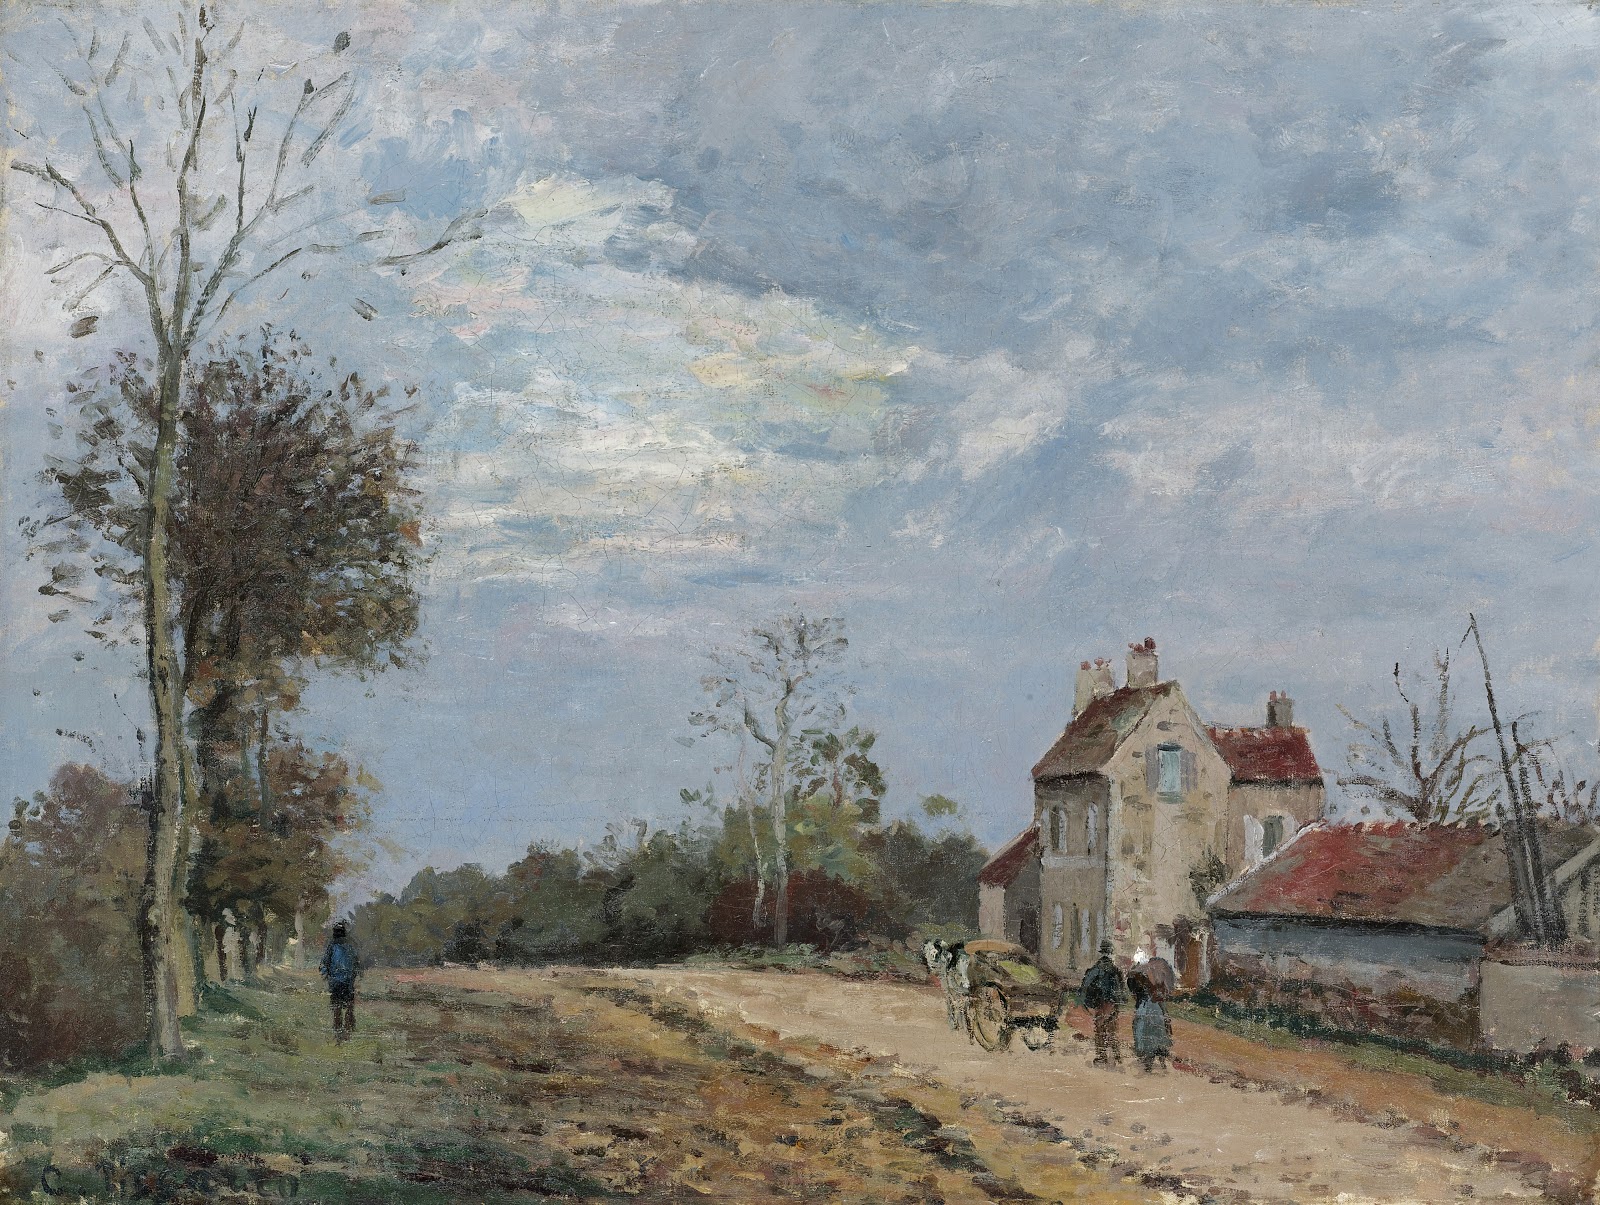 Camille+Pissarro-1830-1903 (424).jpg